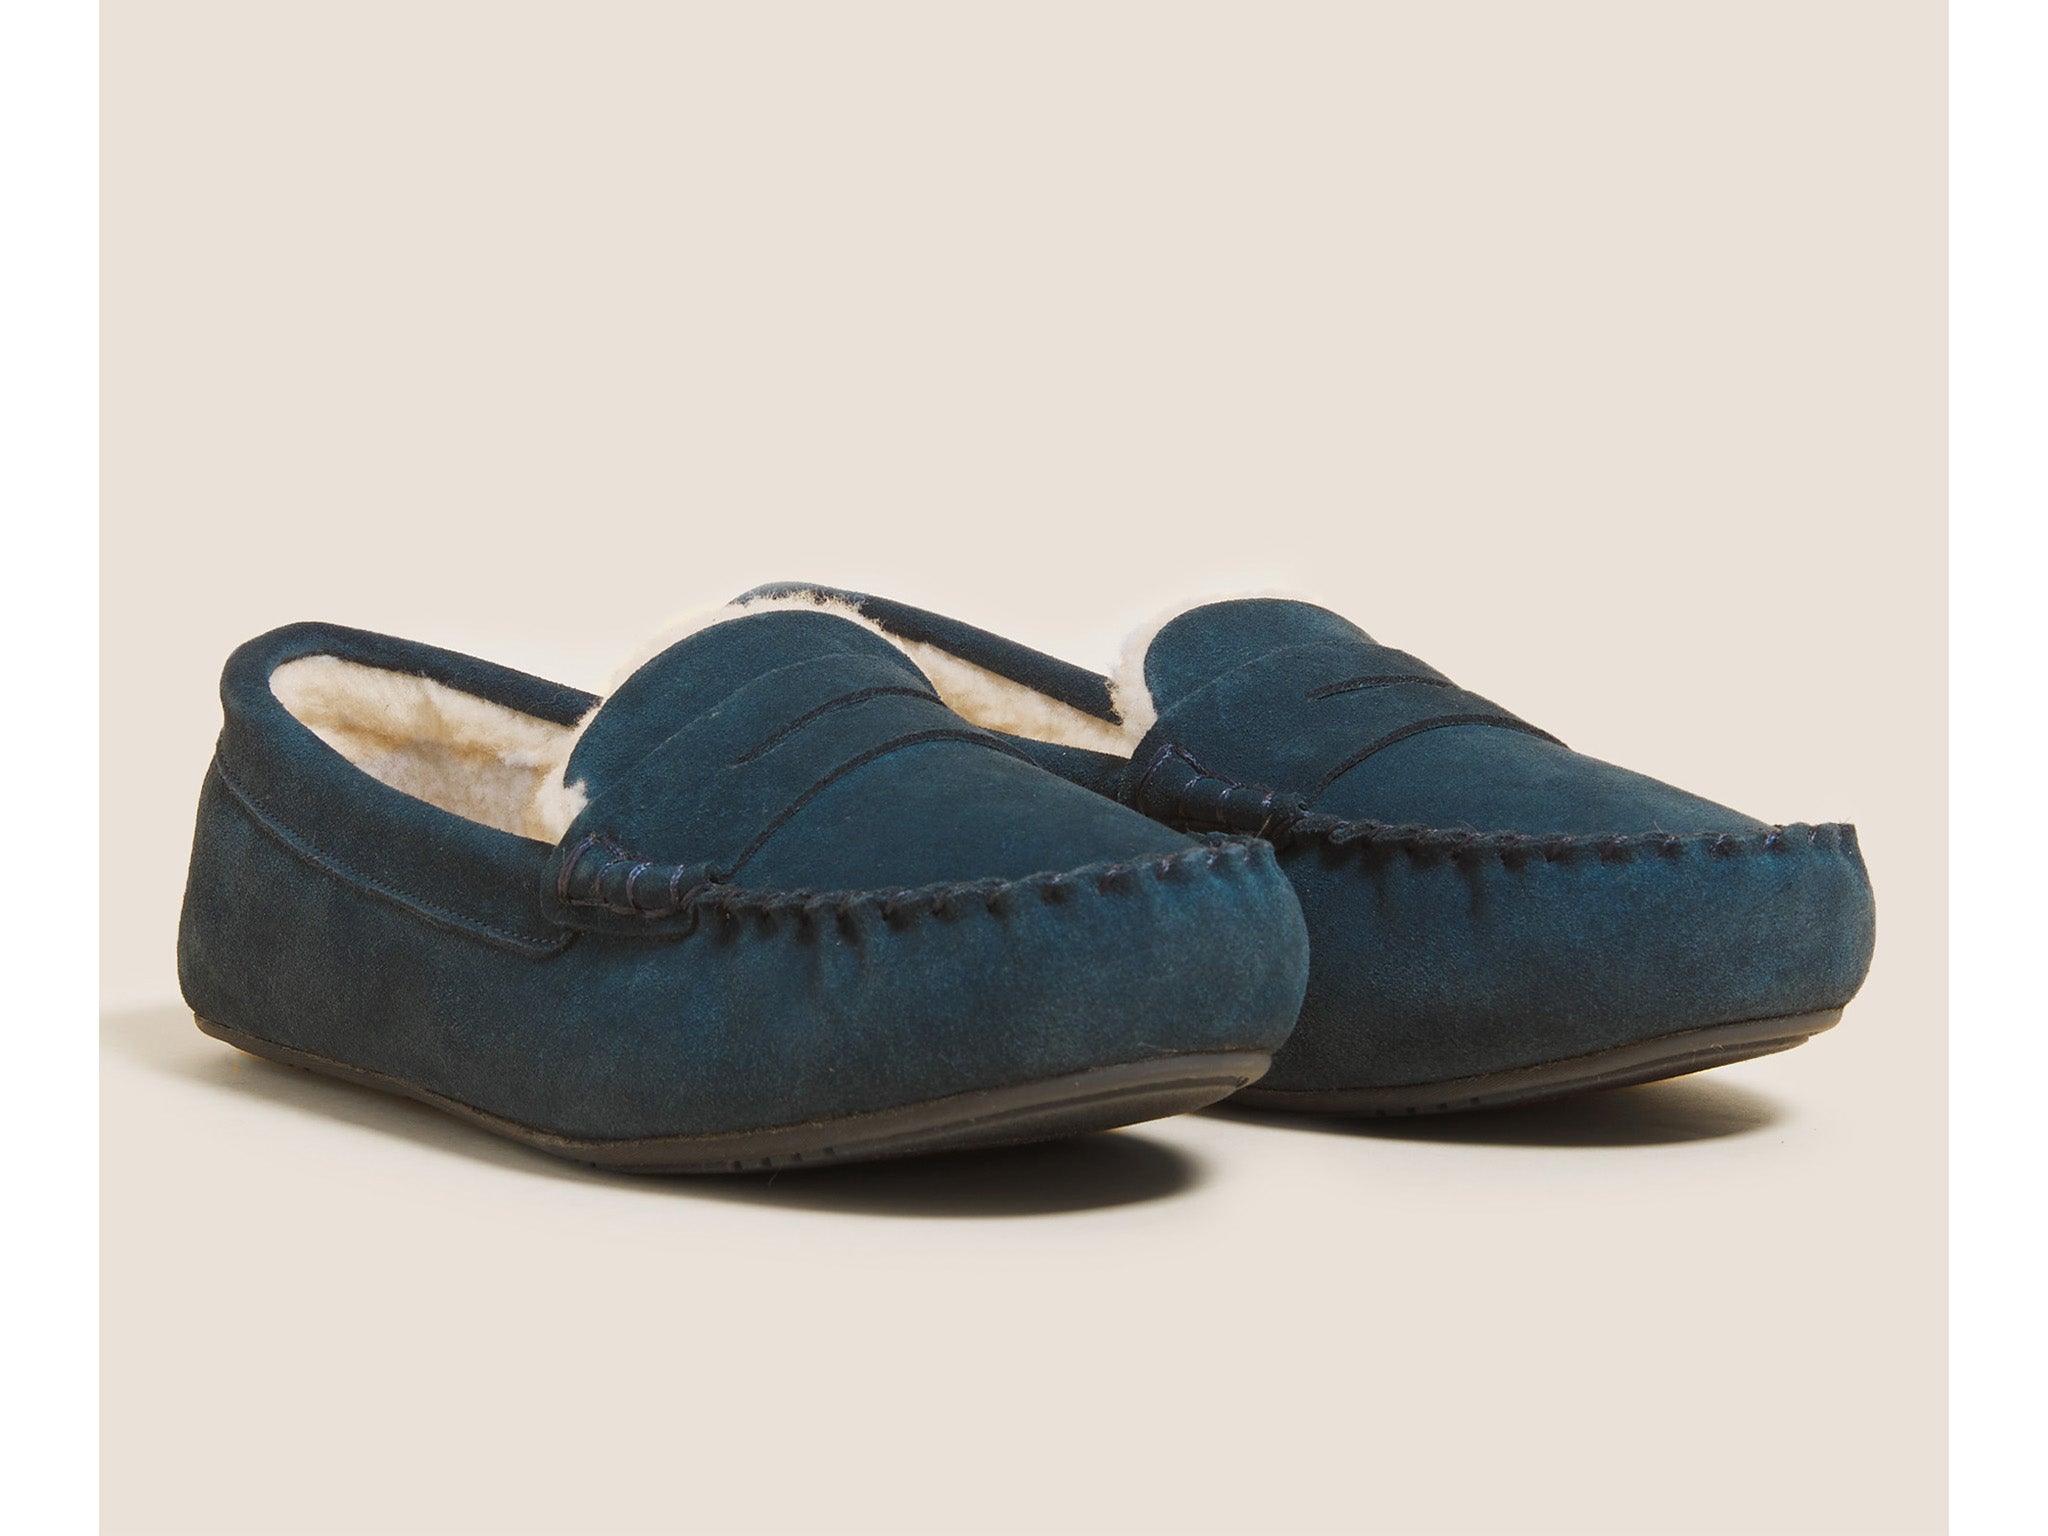 Marks & Spencer suede moccasin slippers